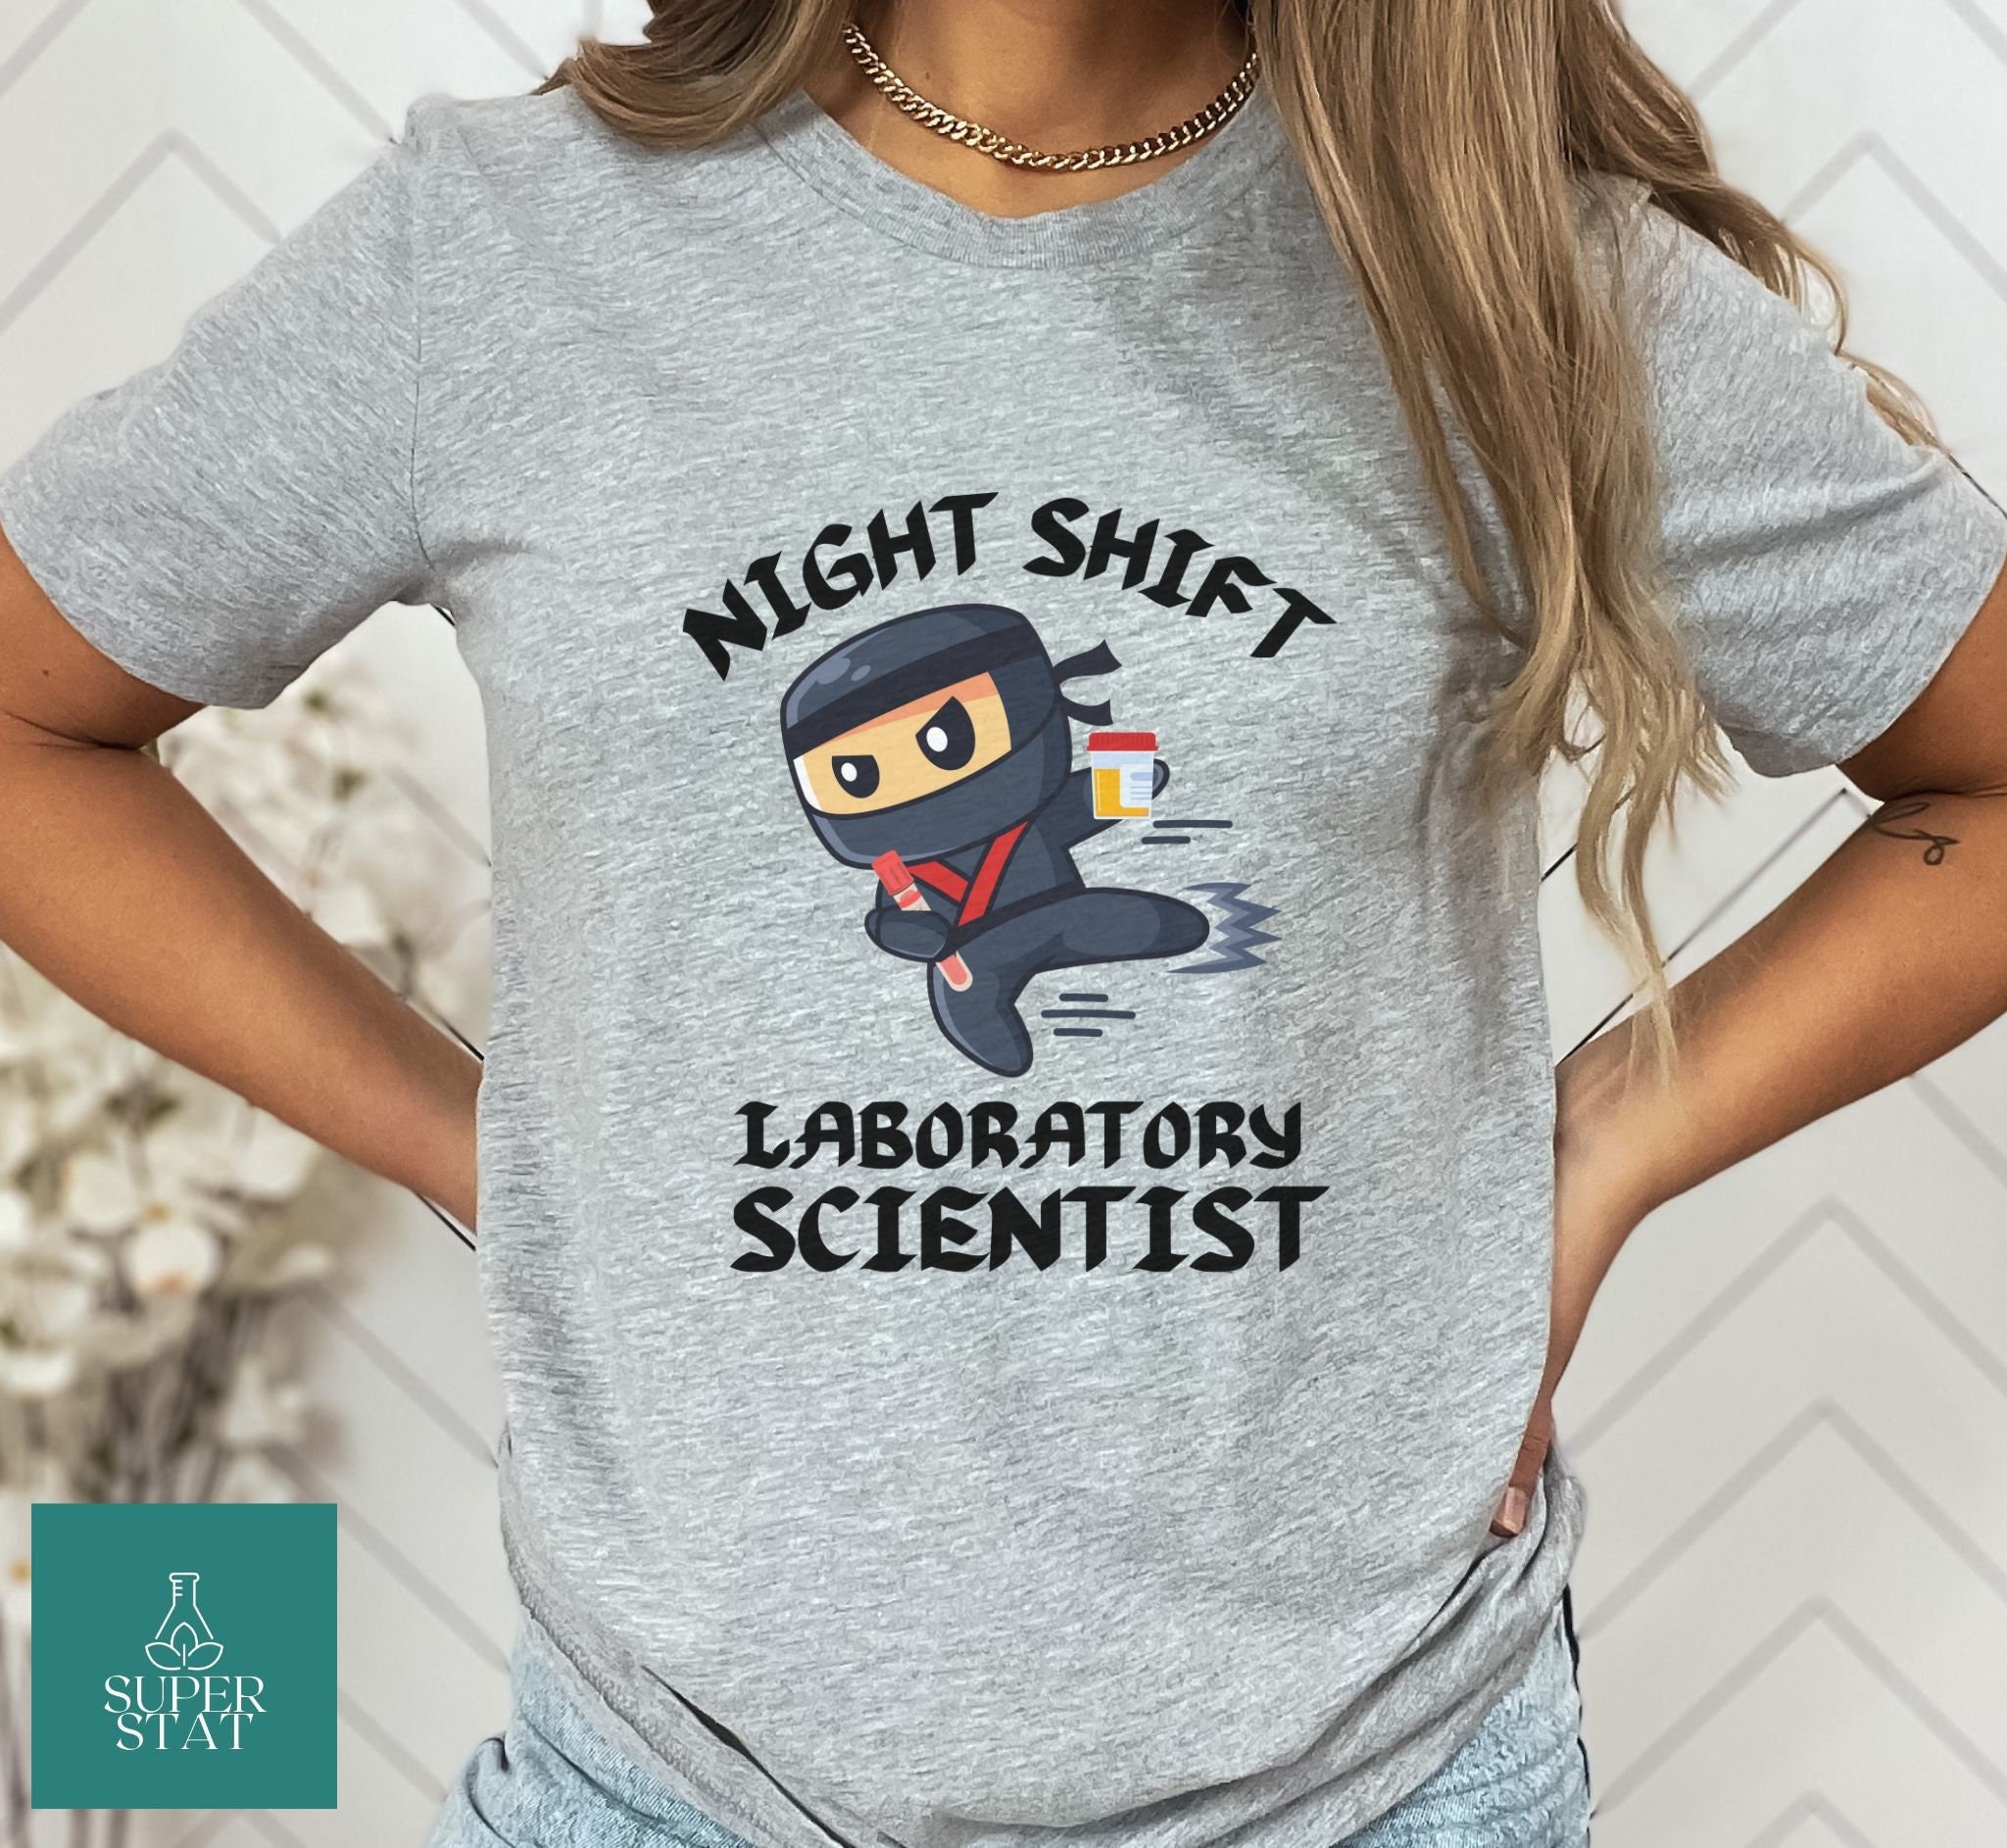 Graveyard Shift / Late Night Shift Worker T-Shirt